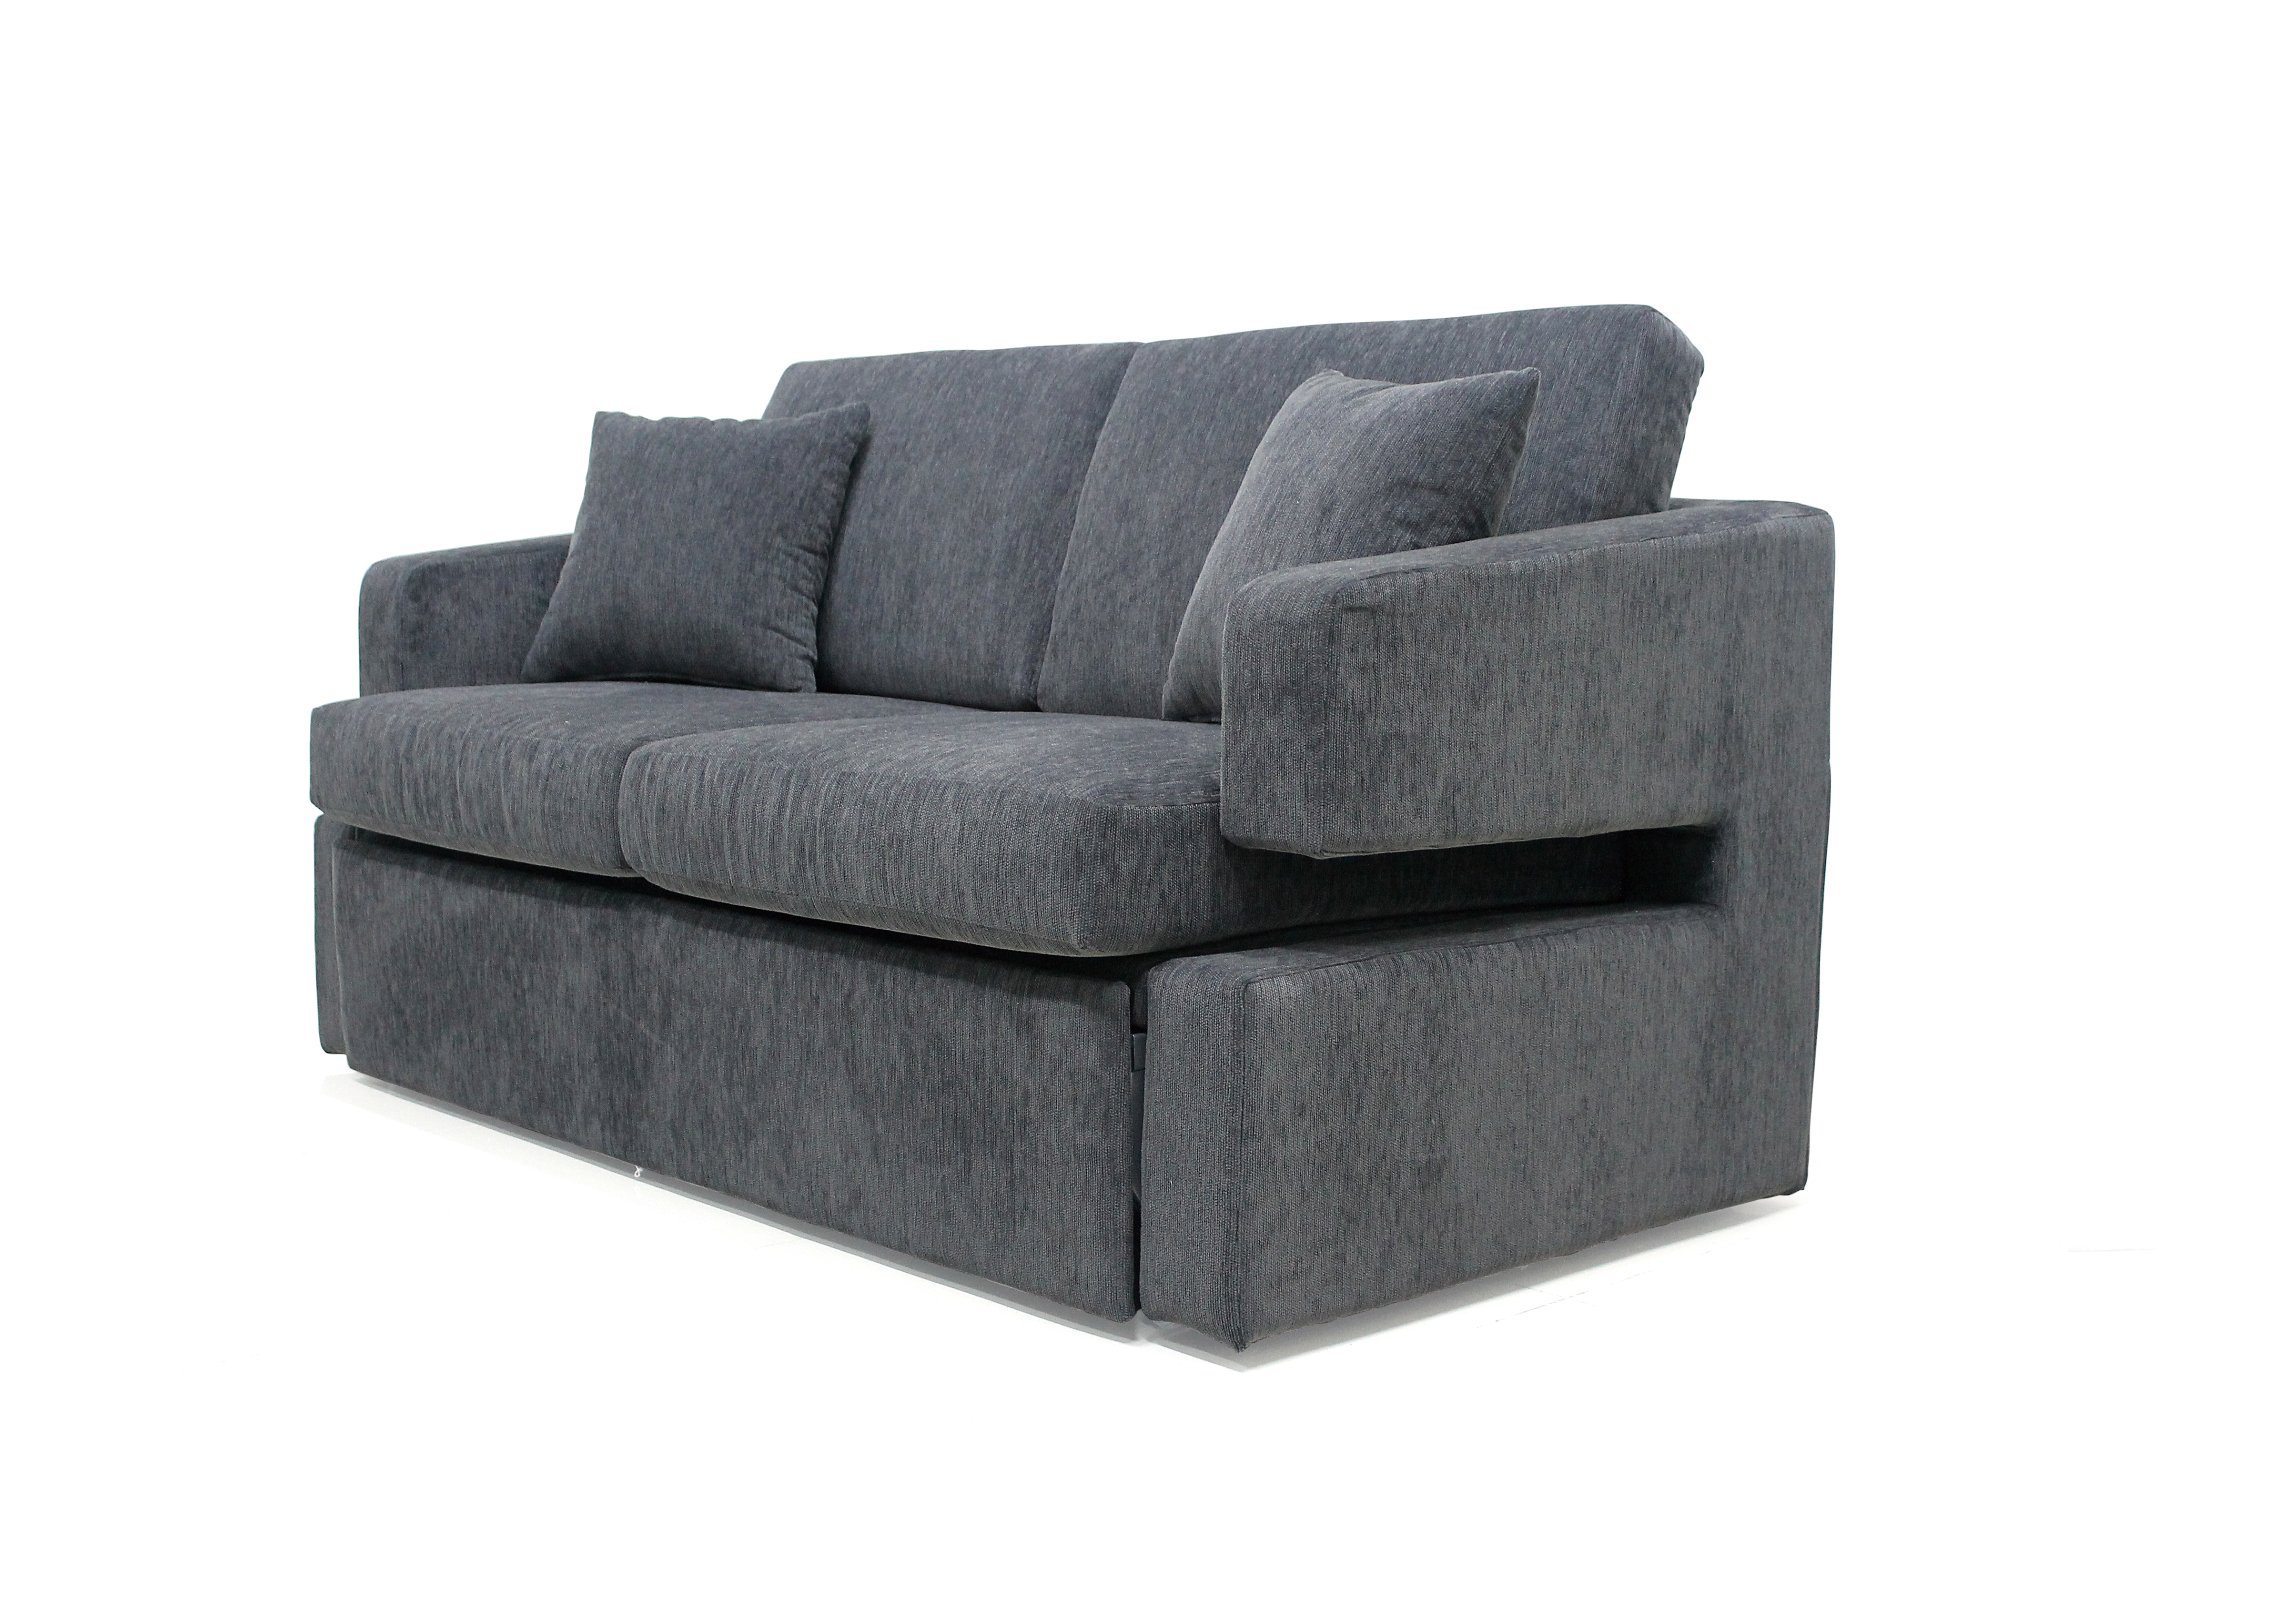 sb furniture sofa bed